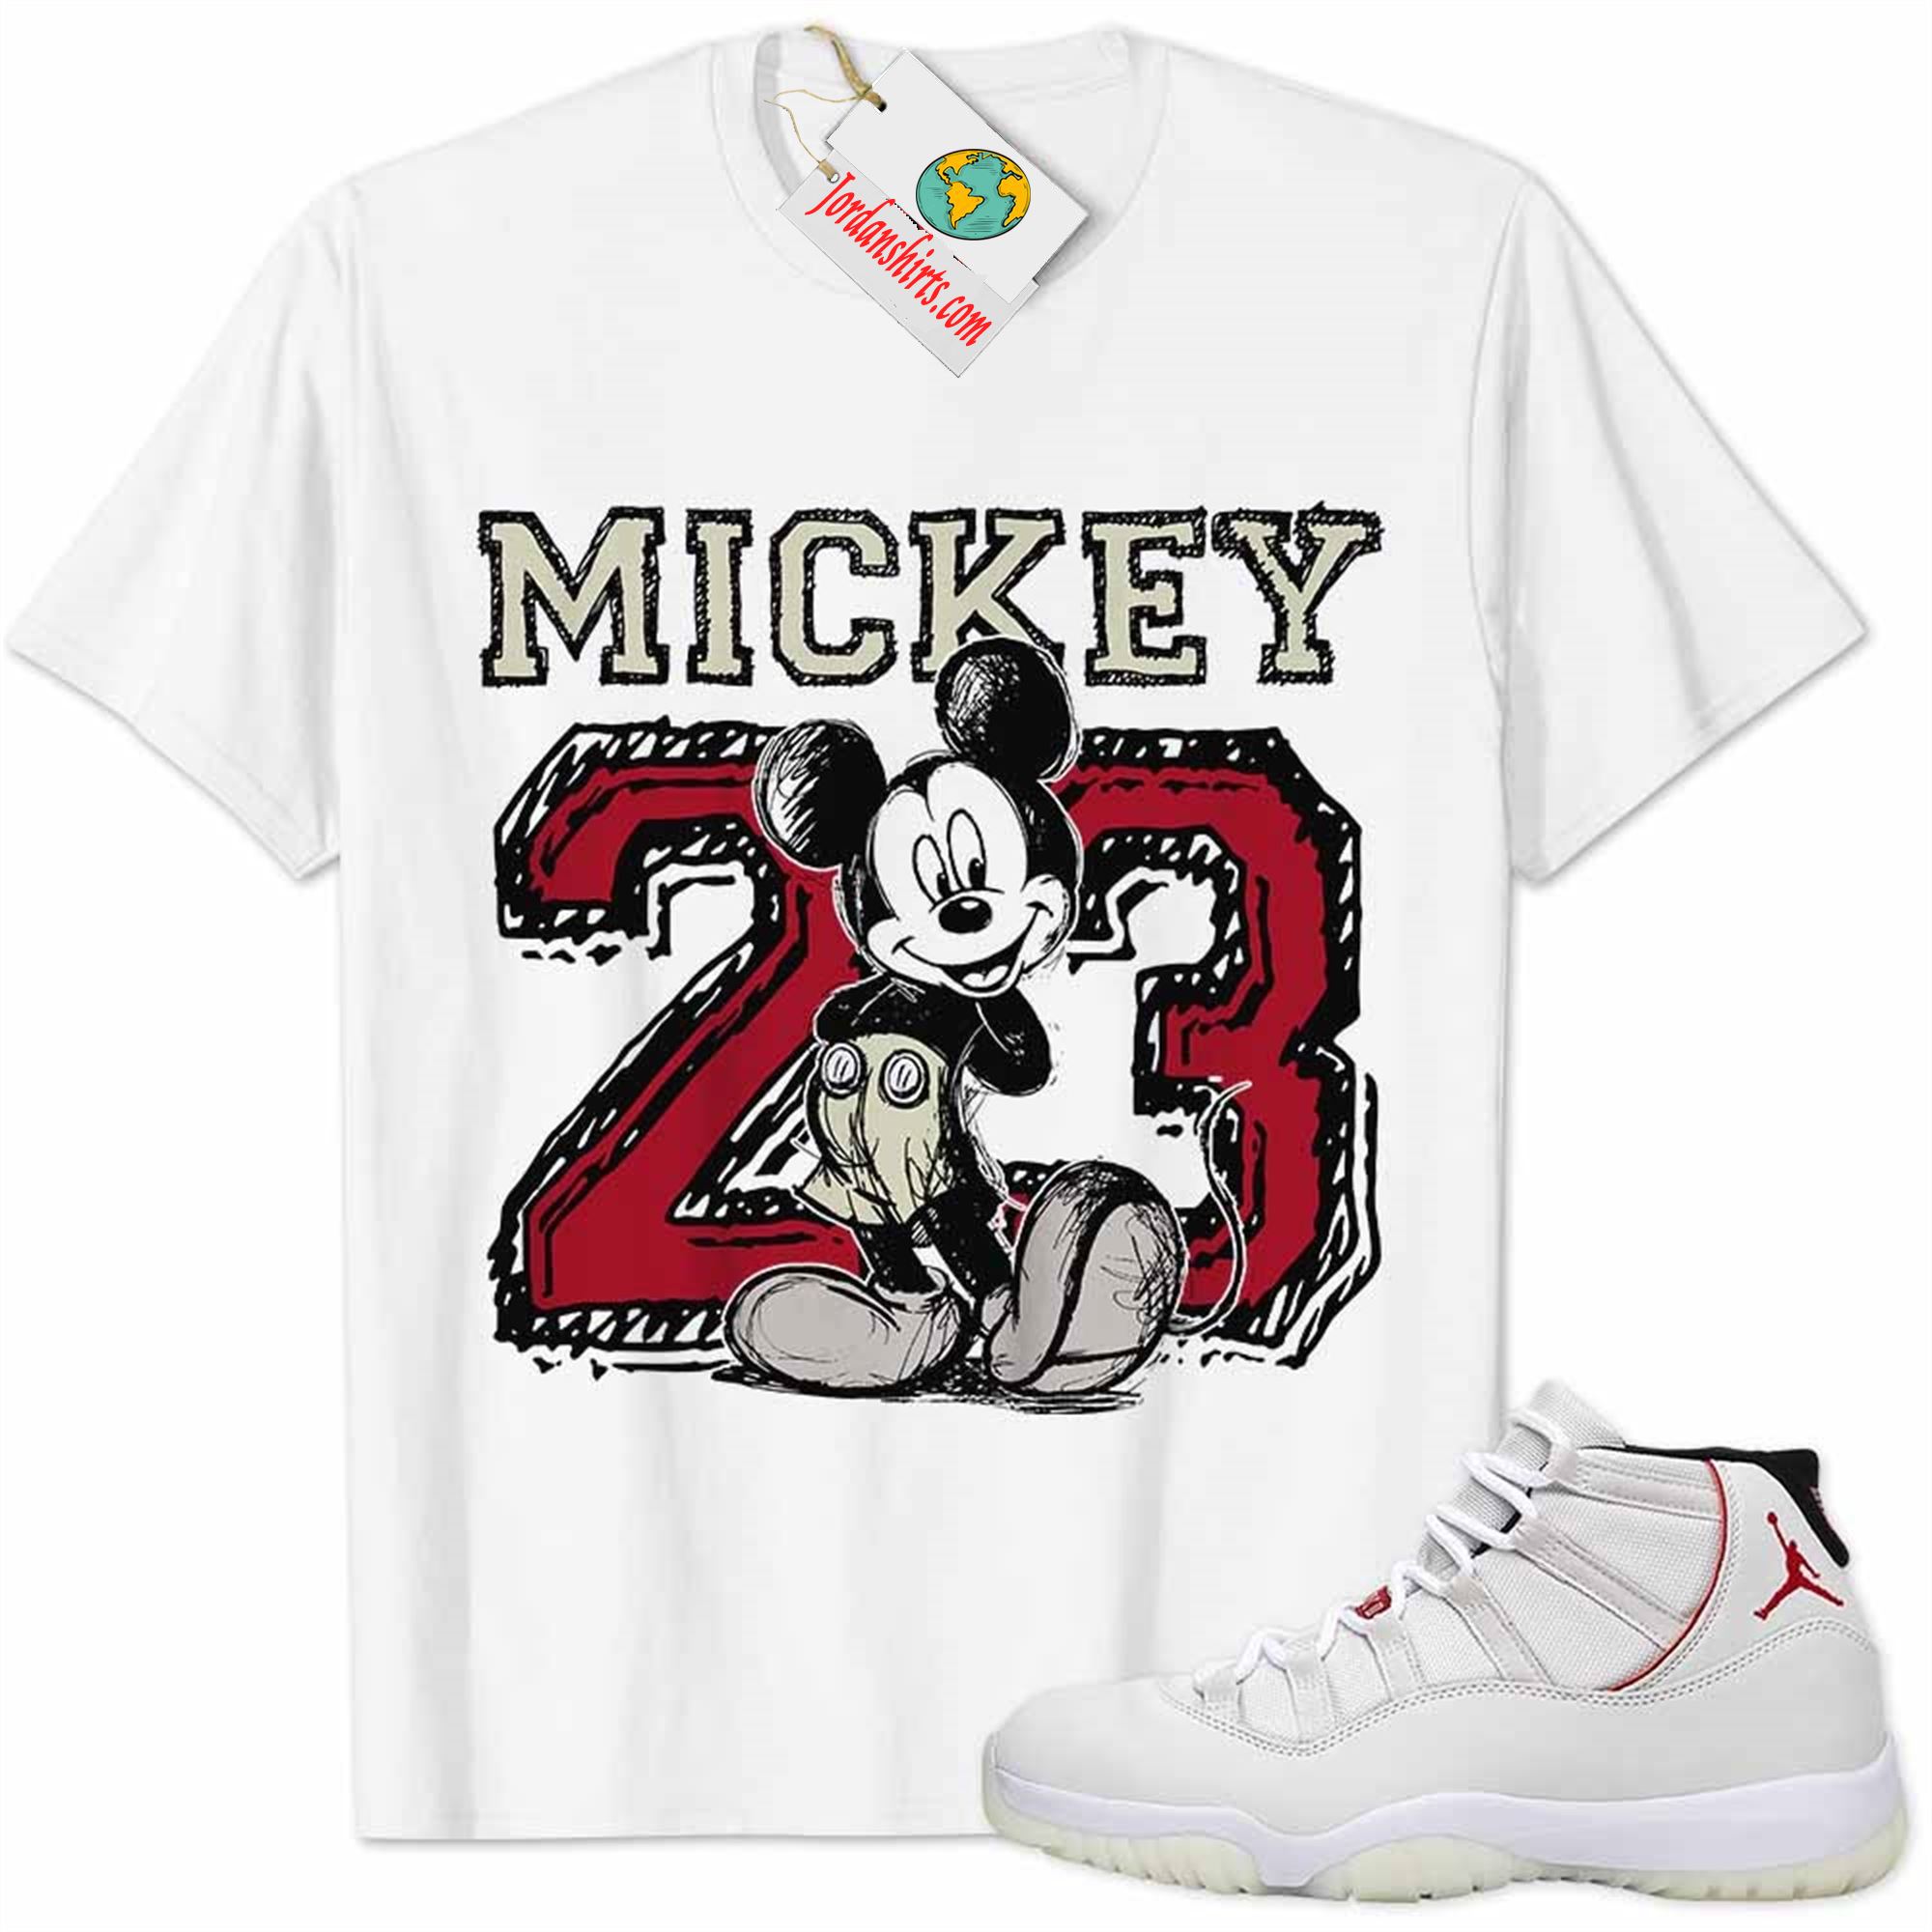 Jordan 11 Shirt, Platinum Tint 11s Shirt Mickey 23 Michael Jordan Number Draw White Plus Size Up To 5xl